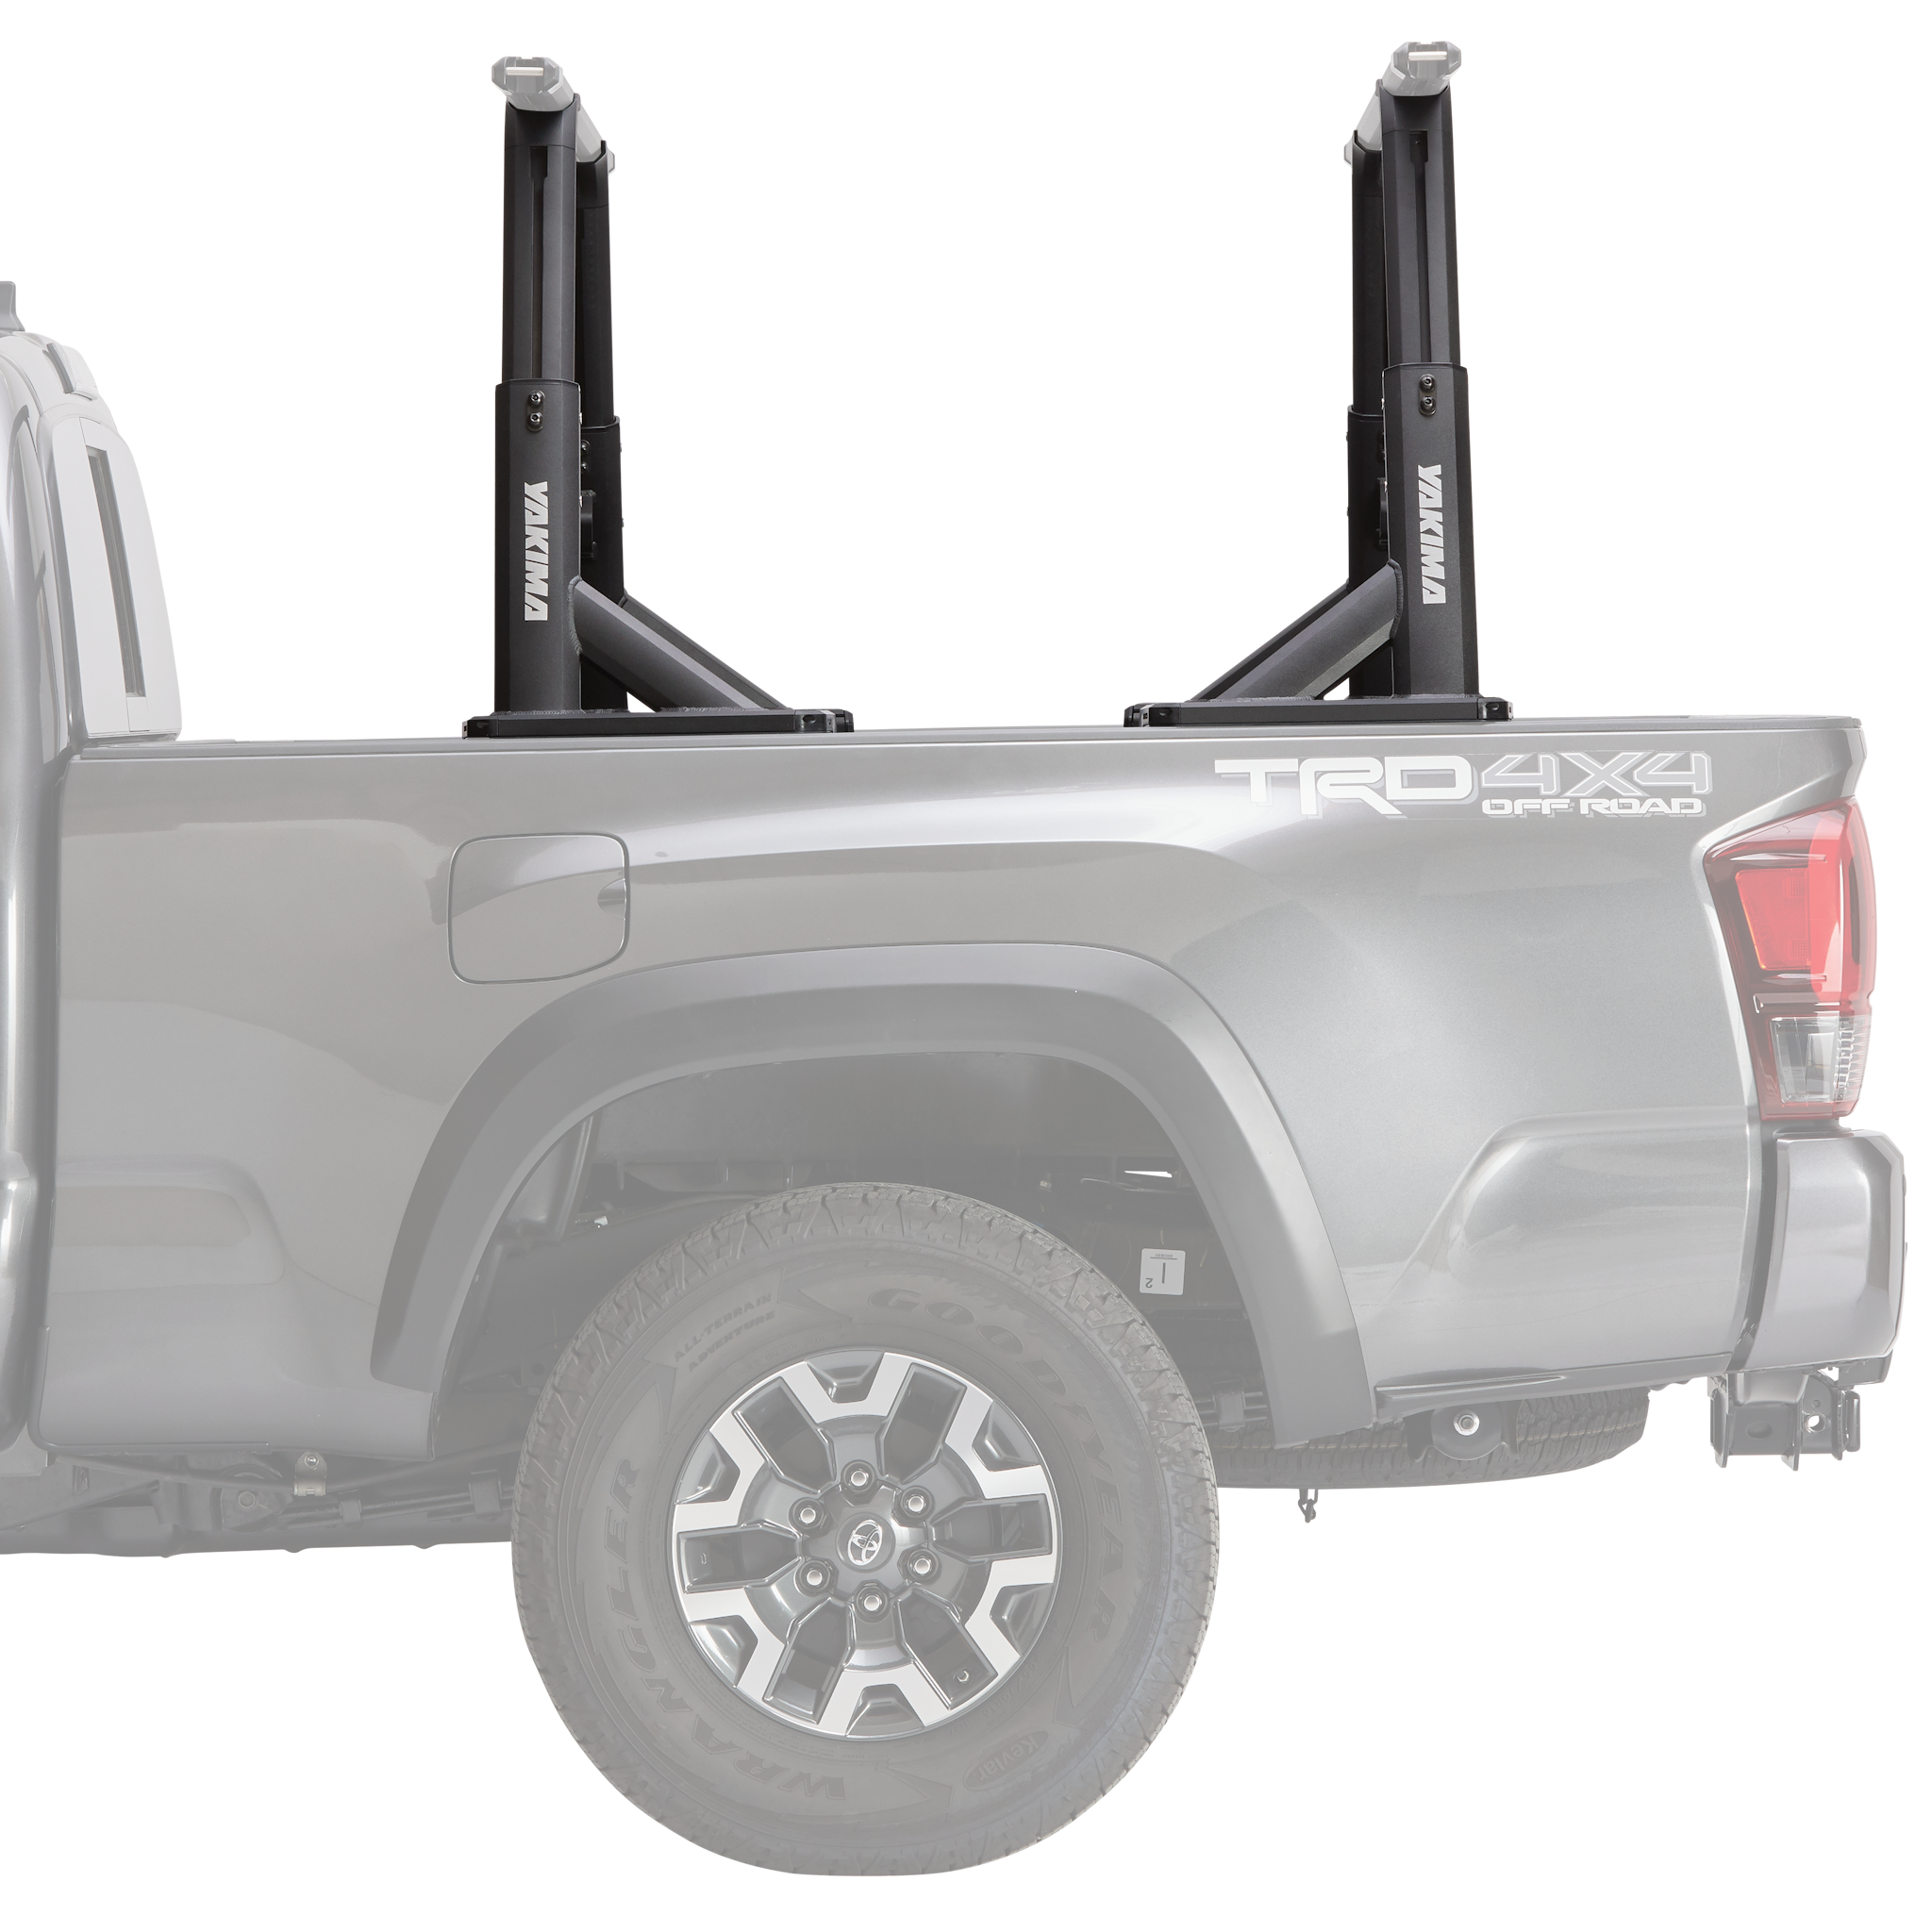 Overhaul HD truck rack side view height adjustability high